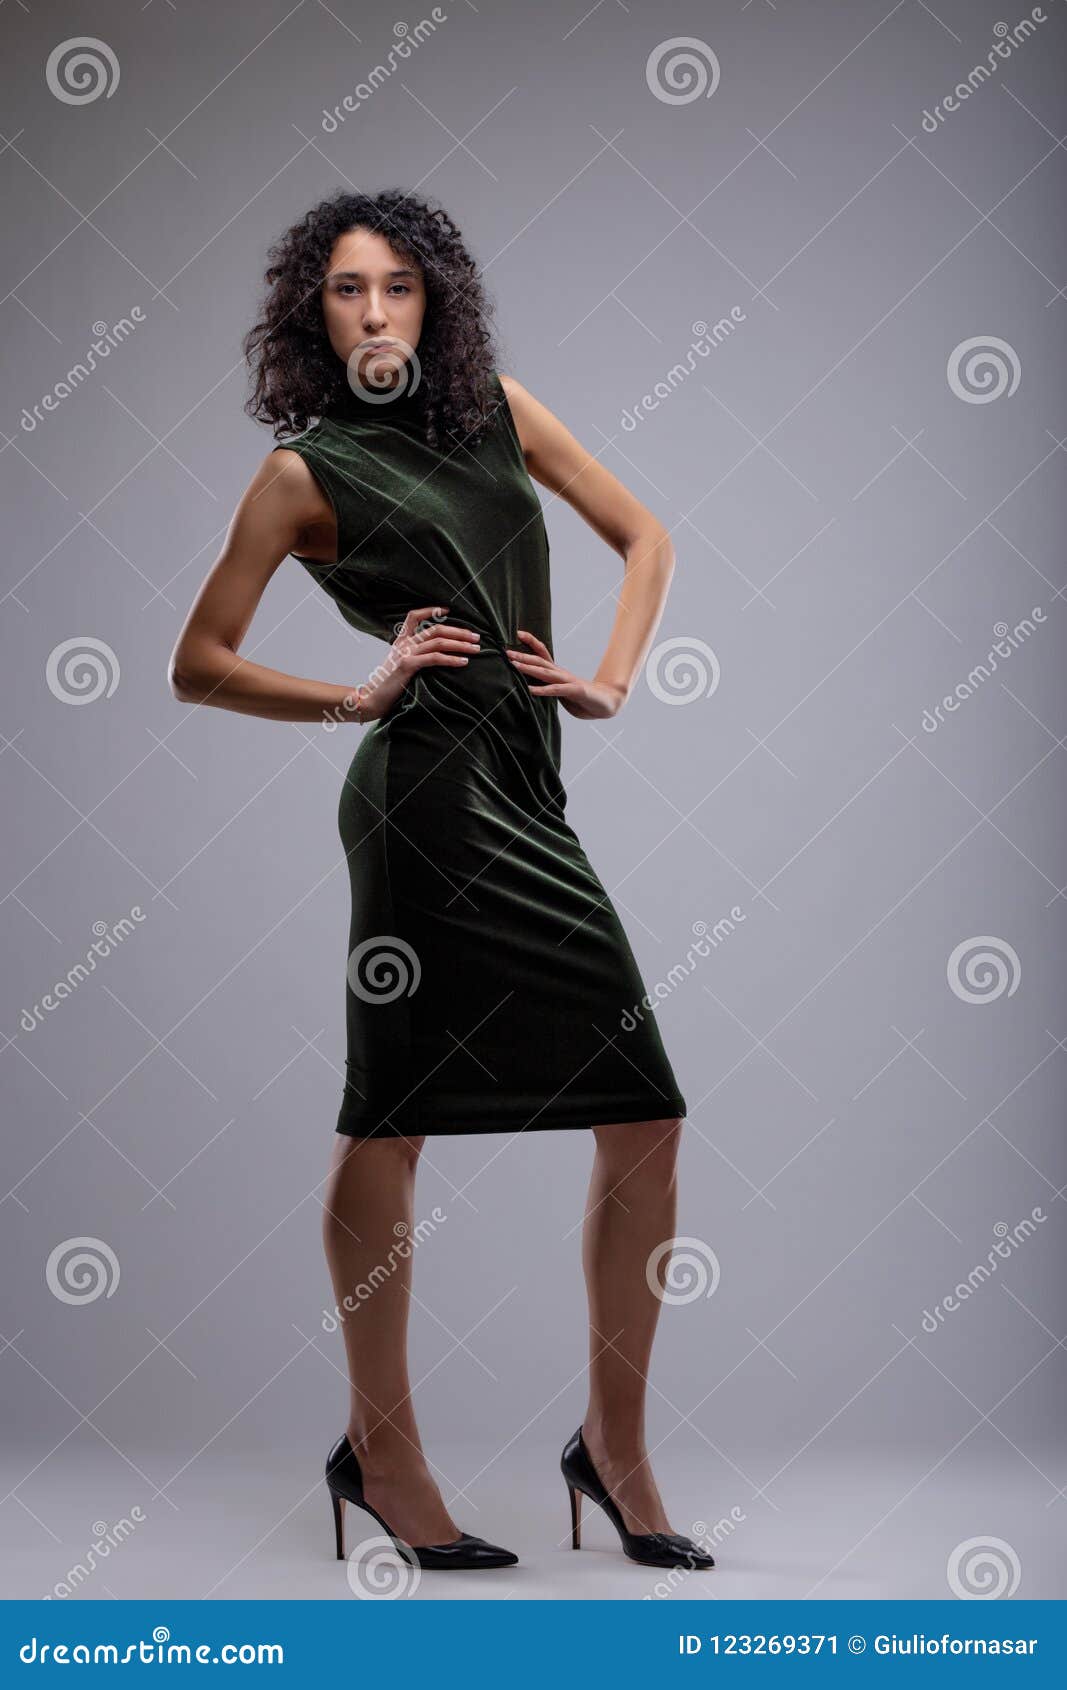 black dress with grey heels